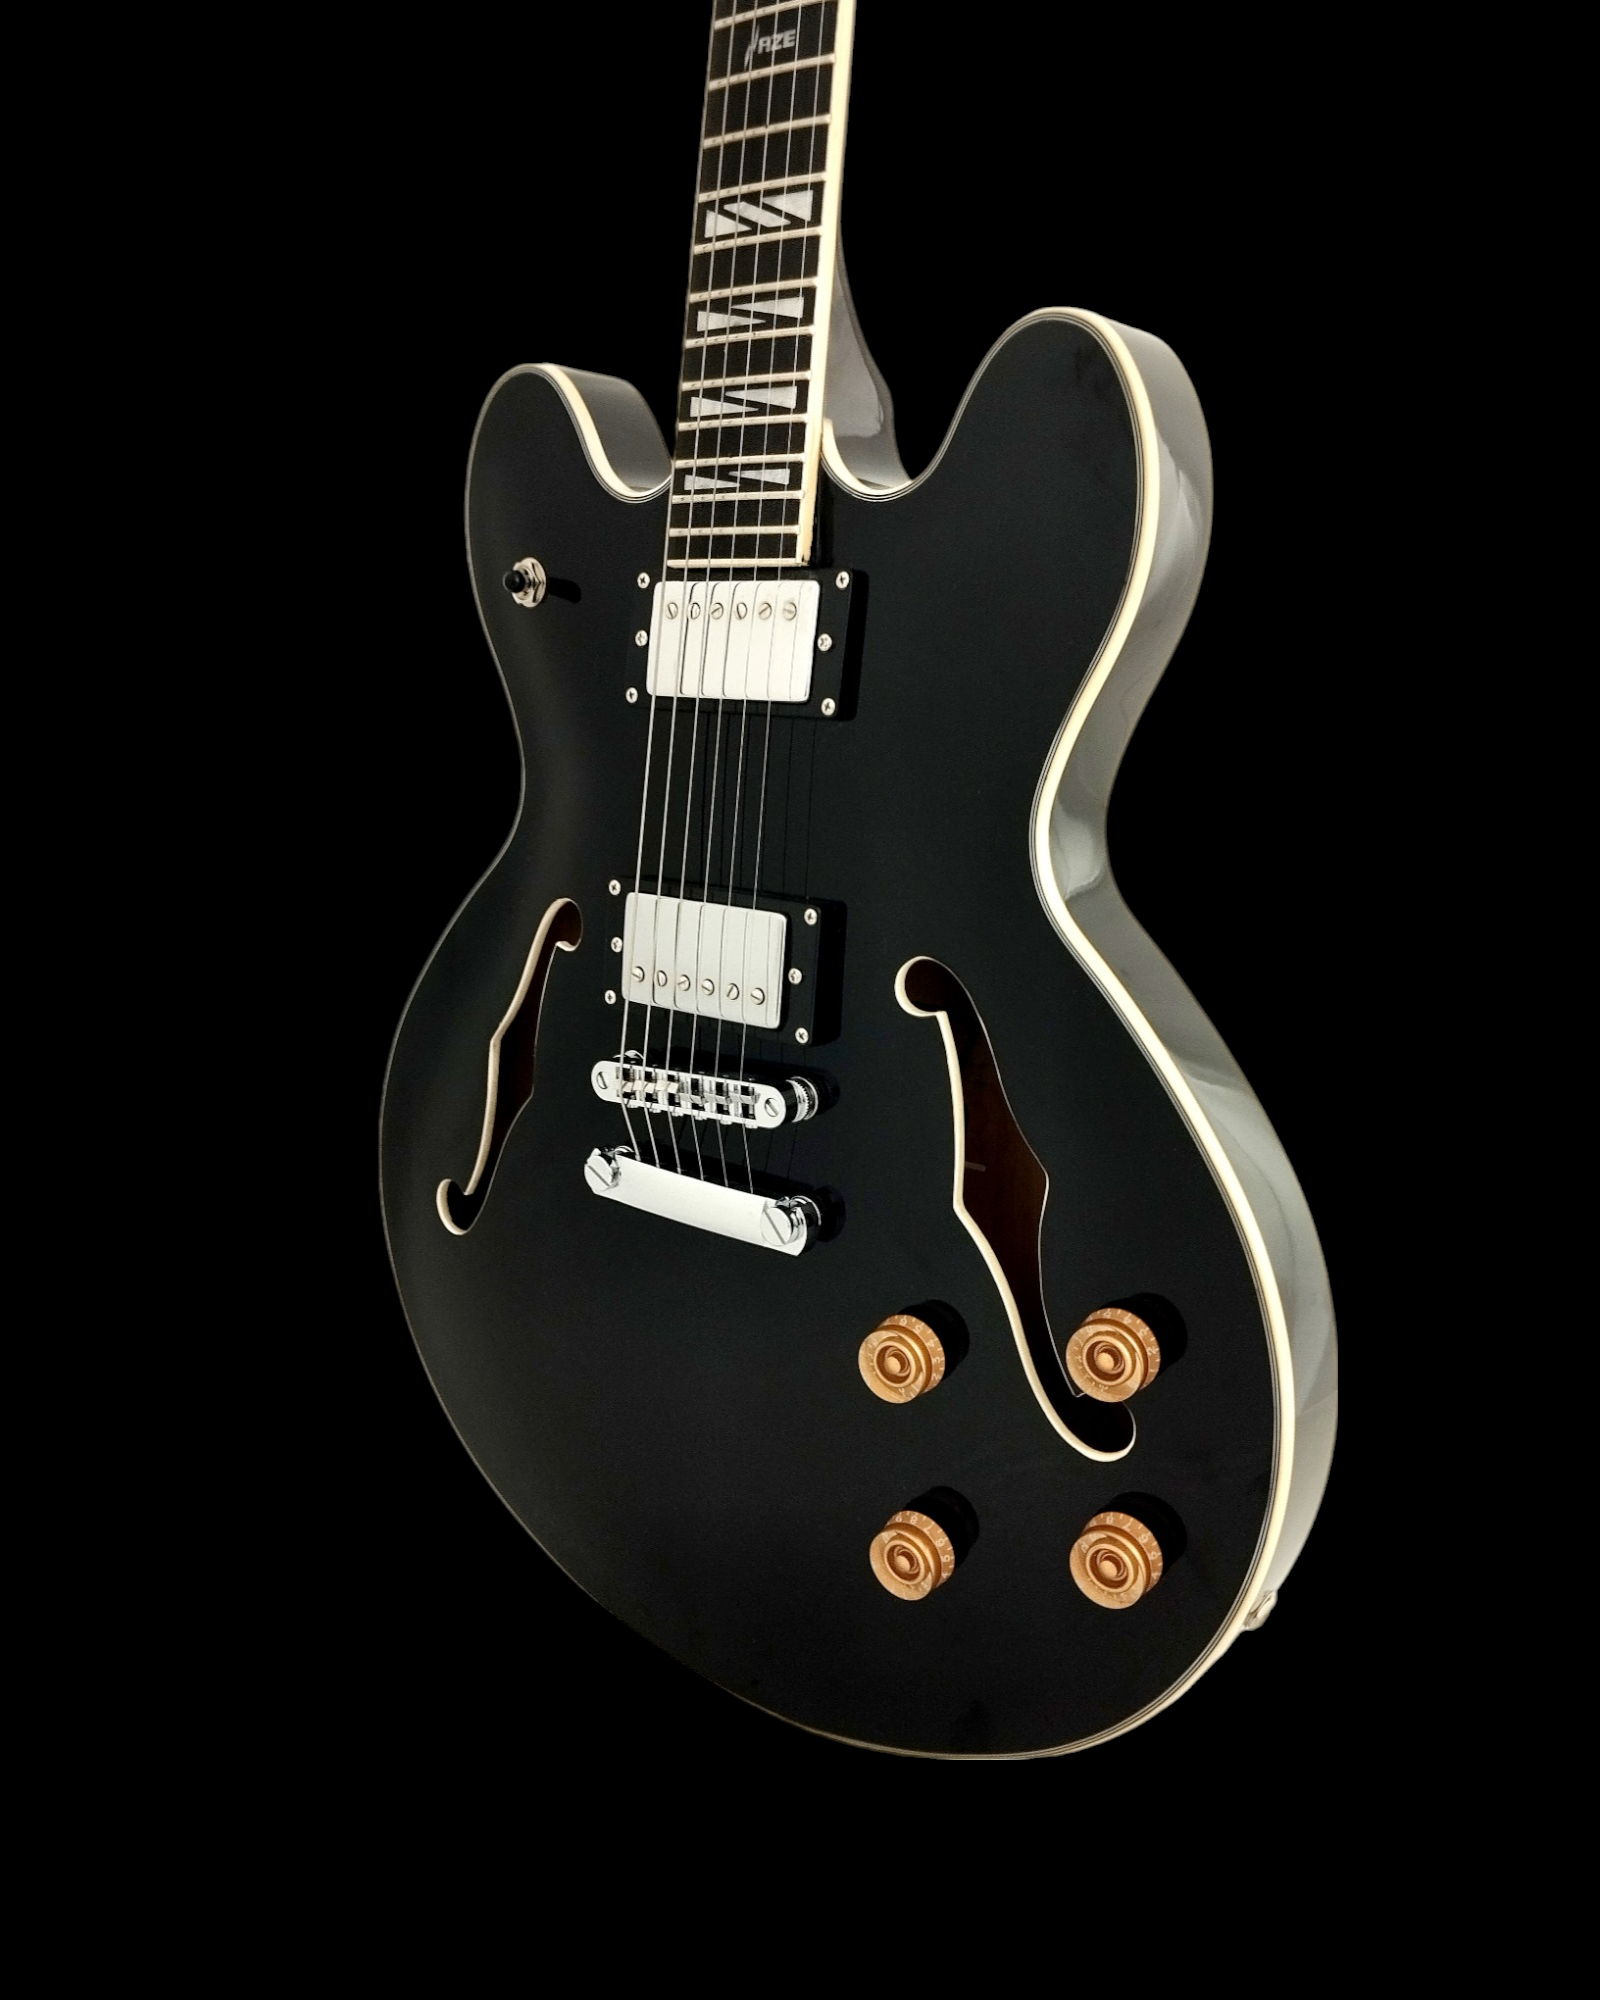 Haze Semi-Hollow 335-Style Flame Maple HES Electric Guitar - Black SEG272BK